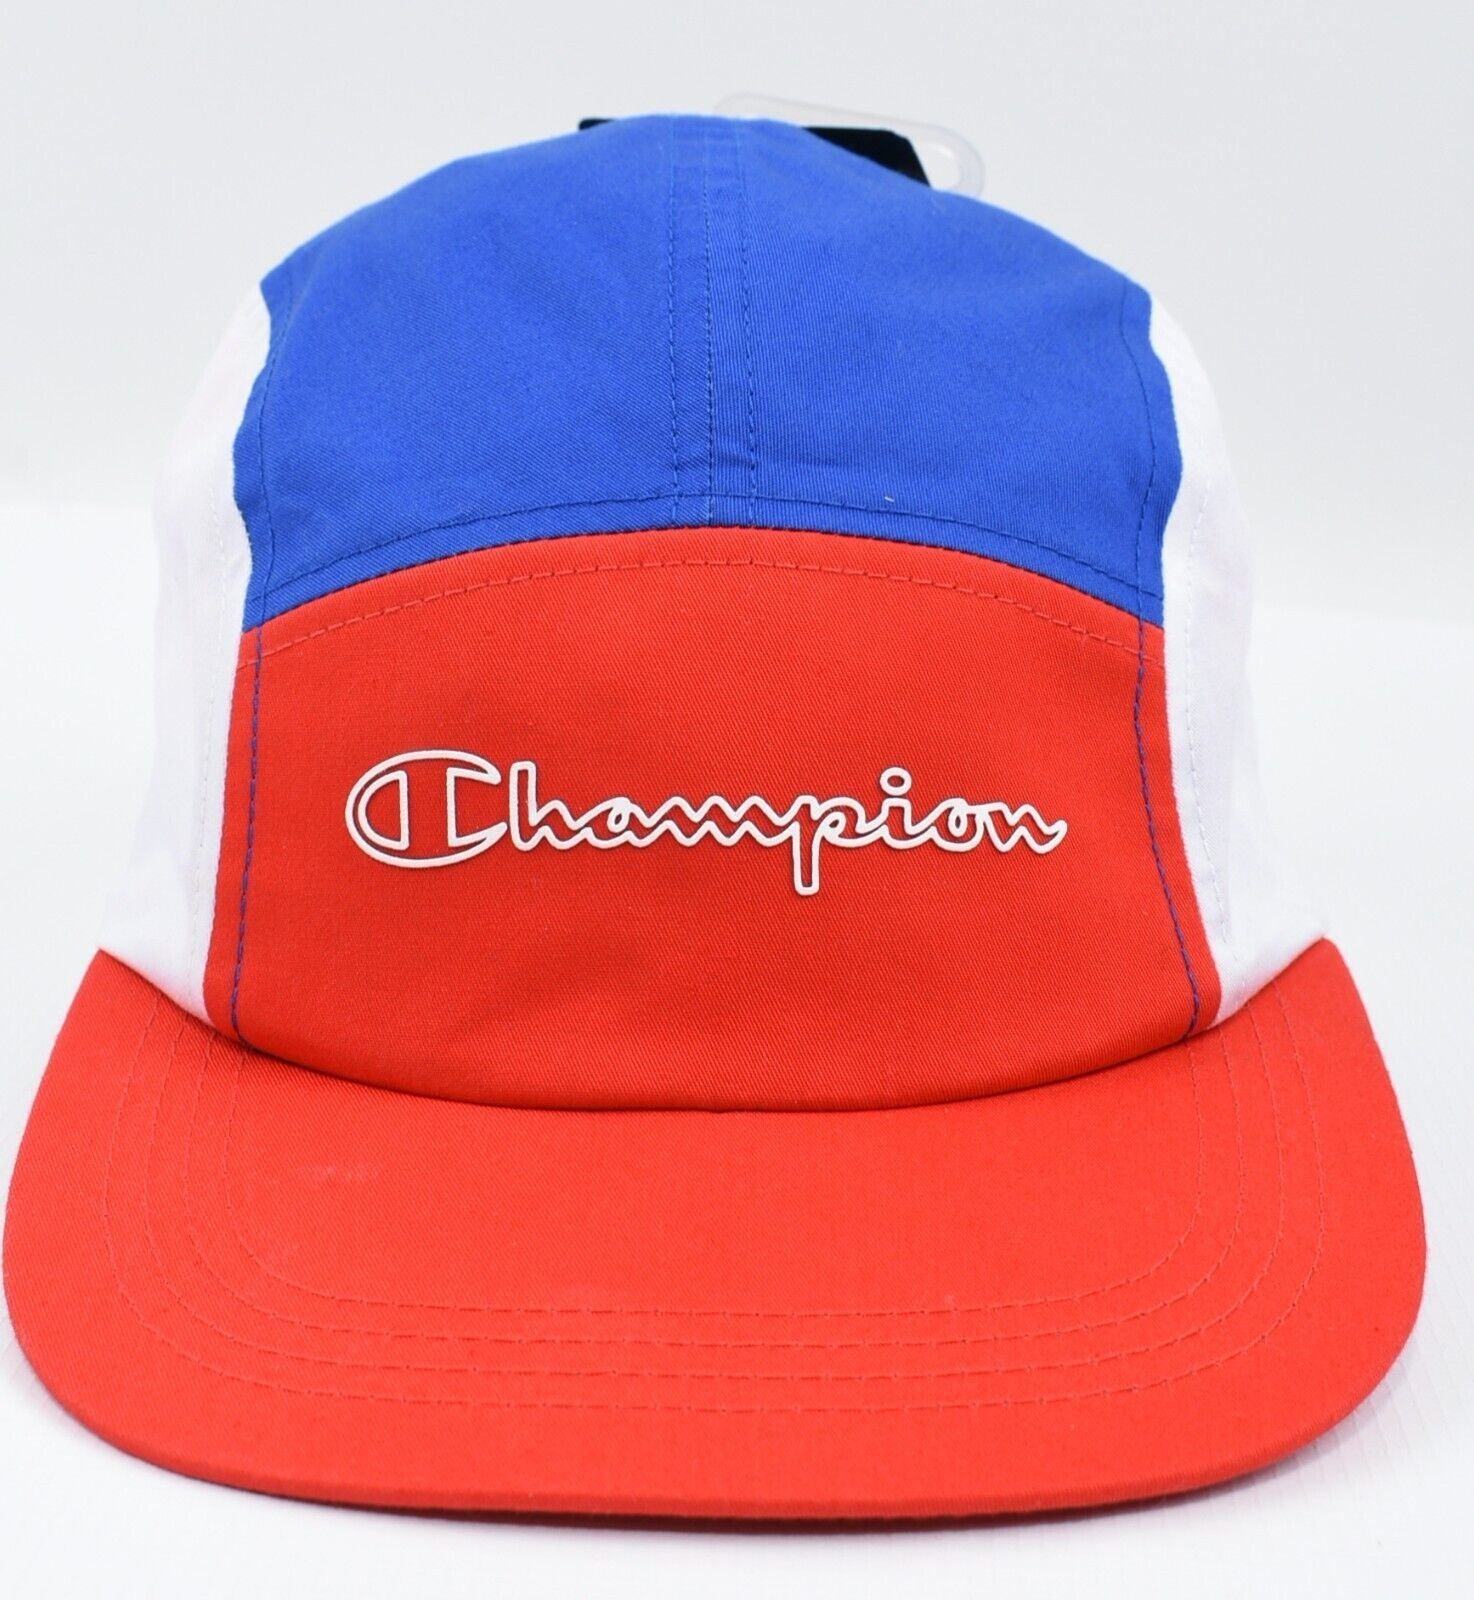 CHAMPION Boys' Kids' Flat Peak Cap, Hat, Red/Blue/White, One Size Youth